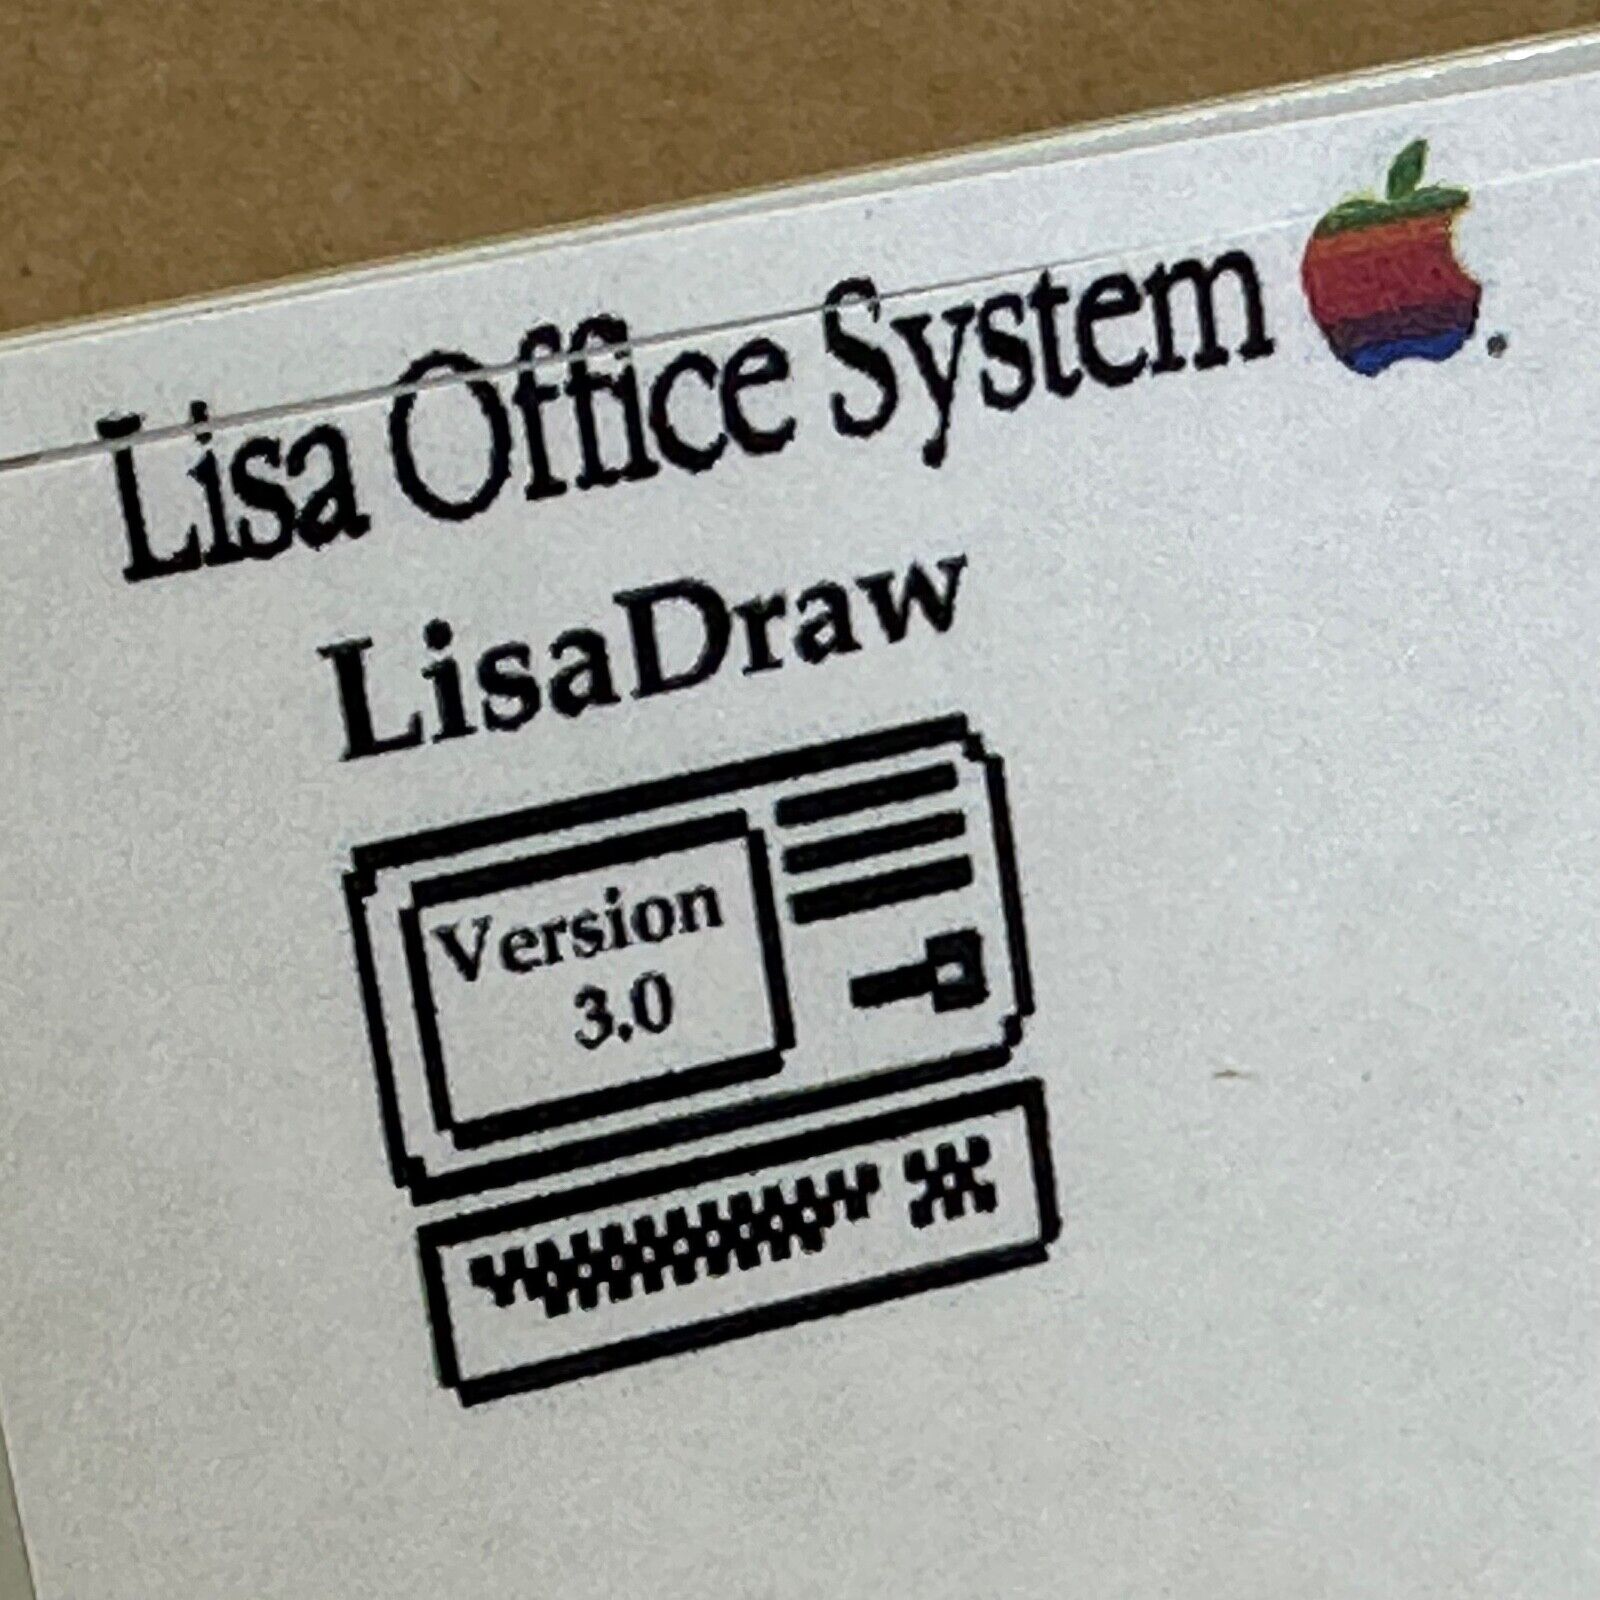 Copy of Lisa Office System LISADRAW disk __ Apple Computer Lisa __ Release 3.0